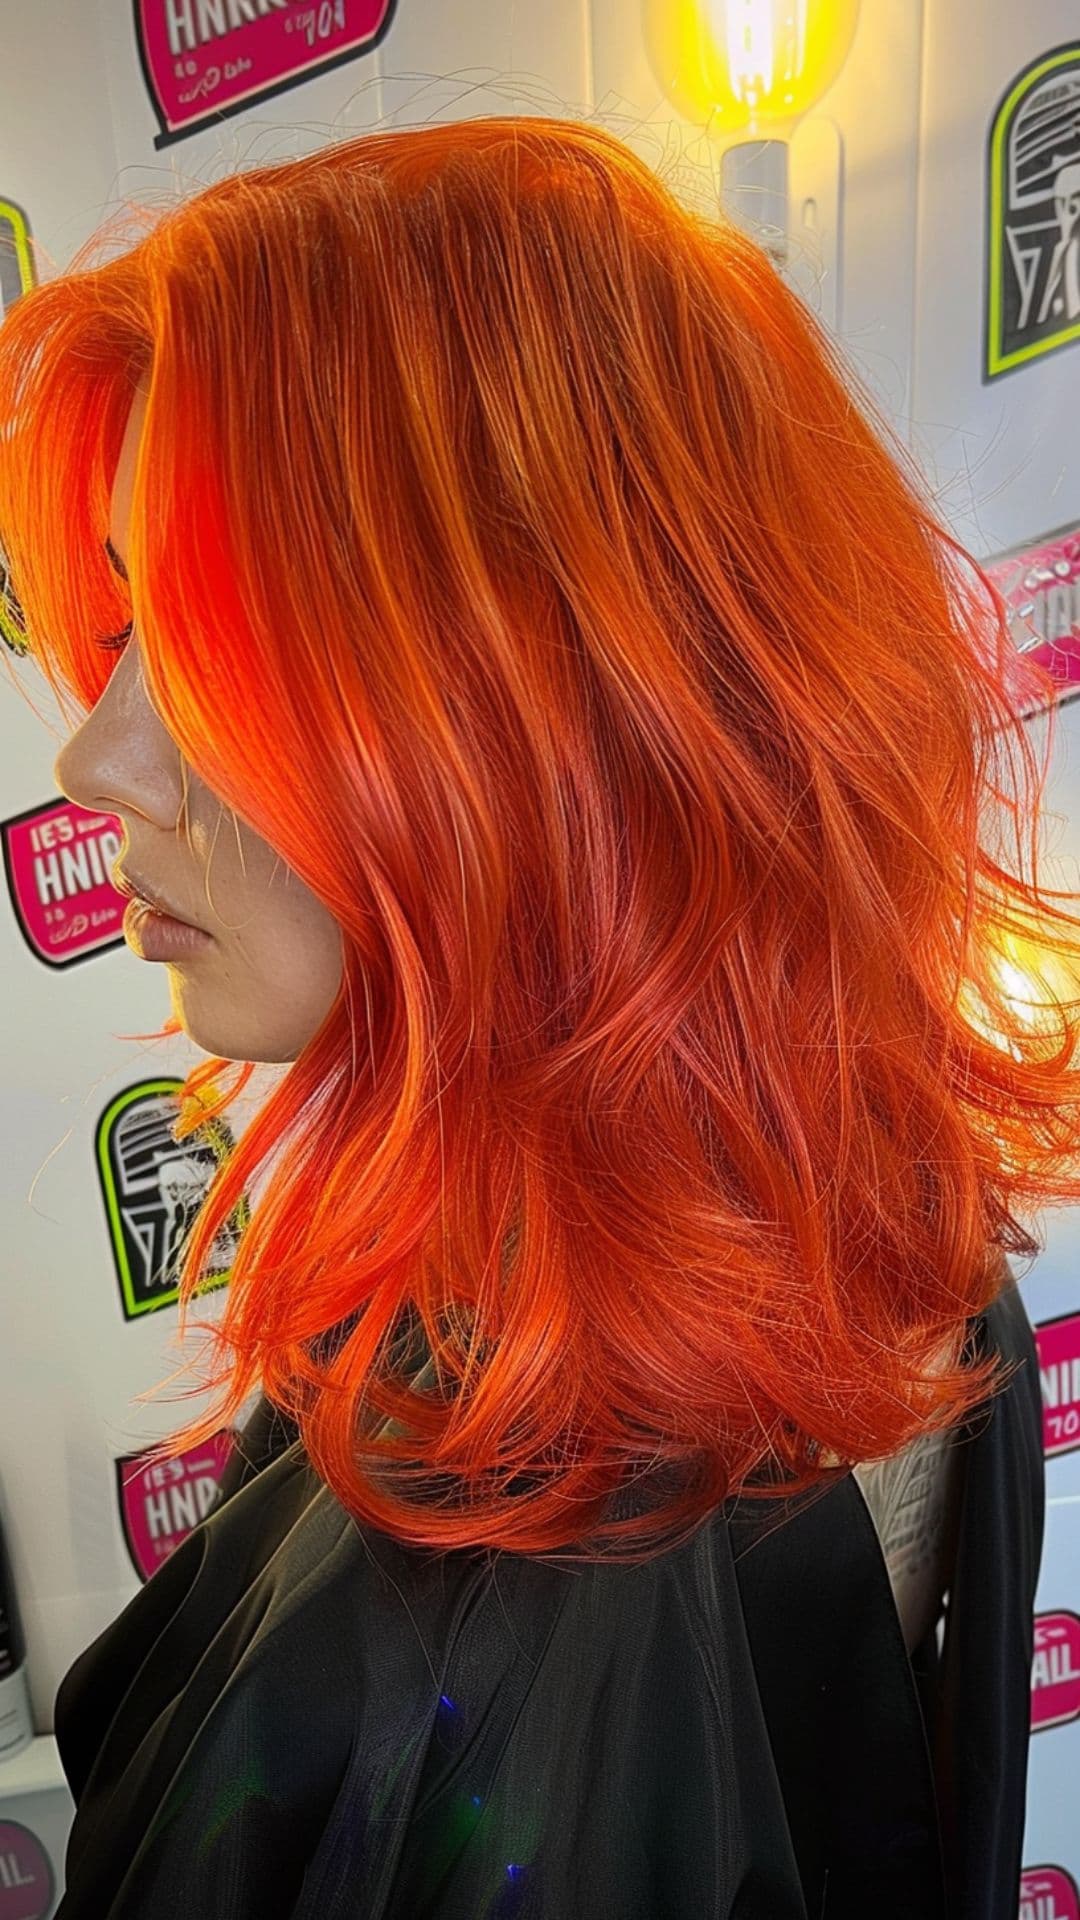 A woman modelling a tangerine hair.